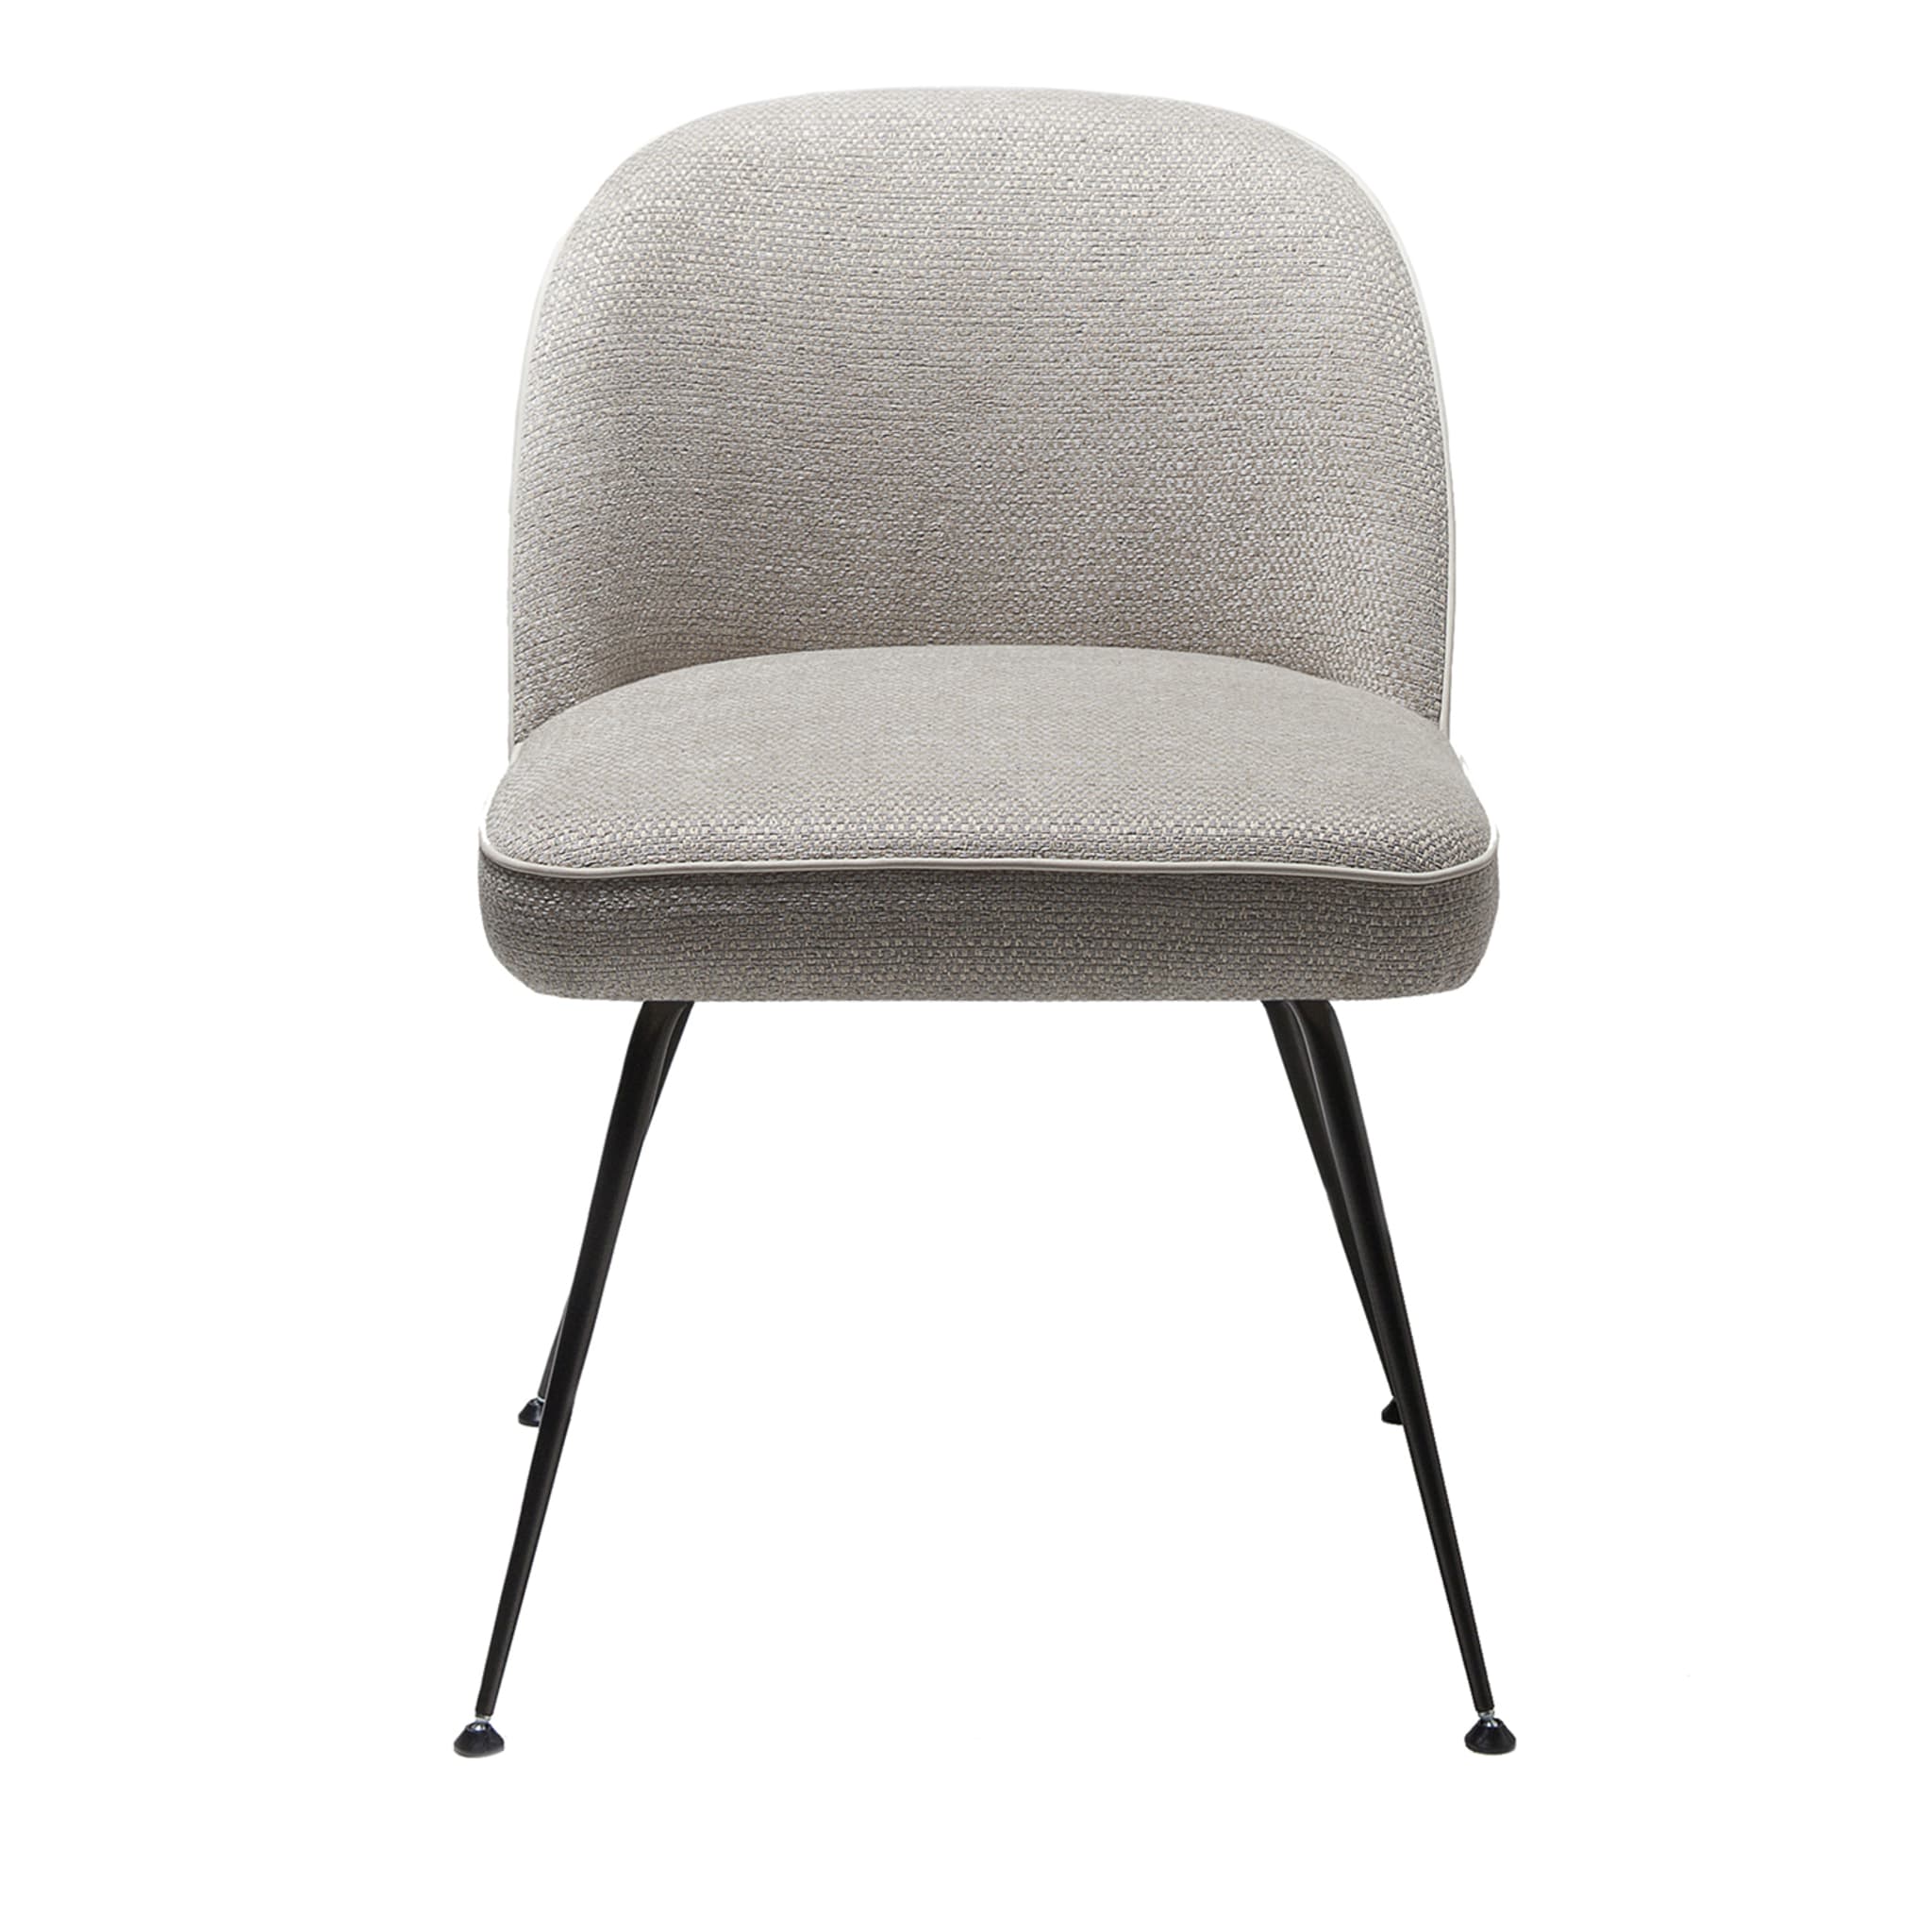 Like 1400 Gray Chair by Gianluigi Landoni - Main view